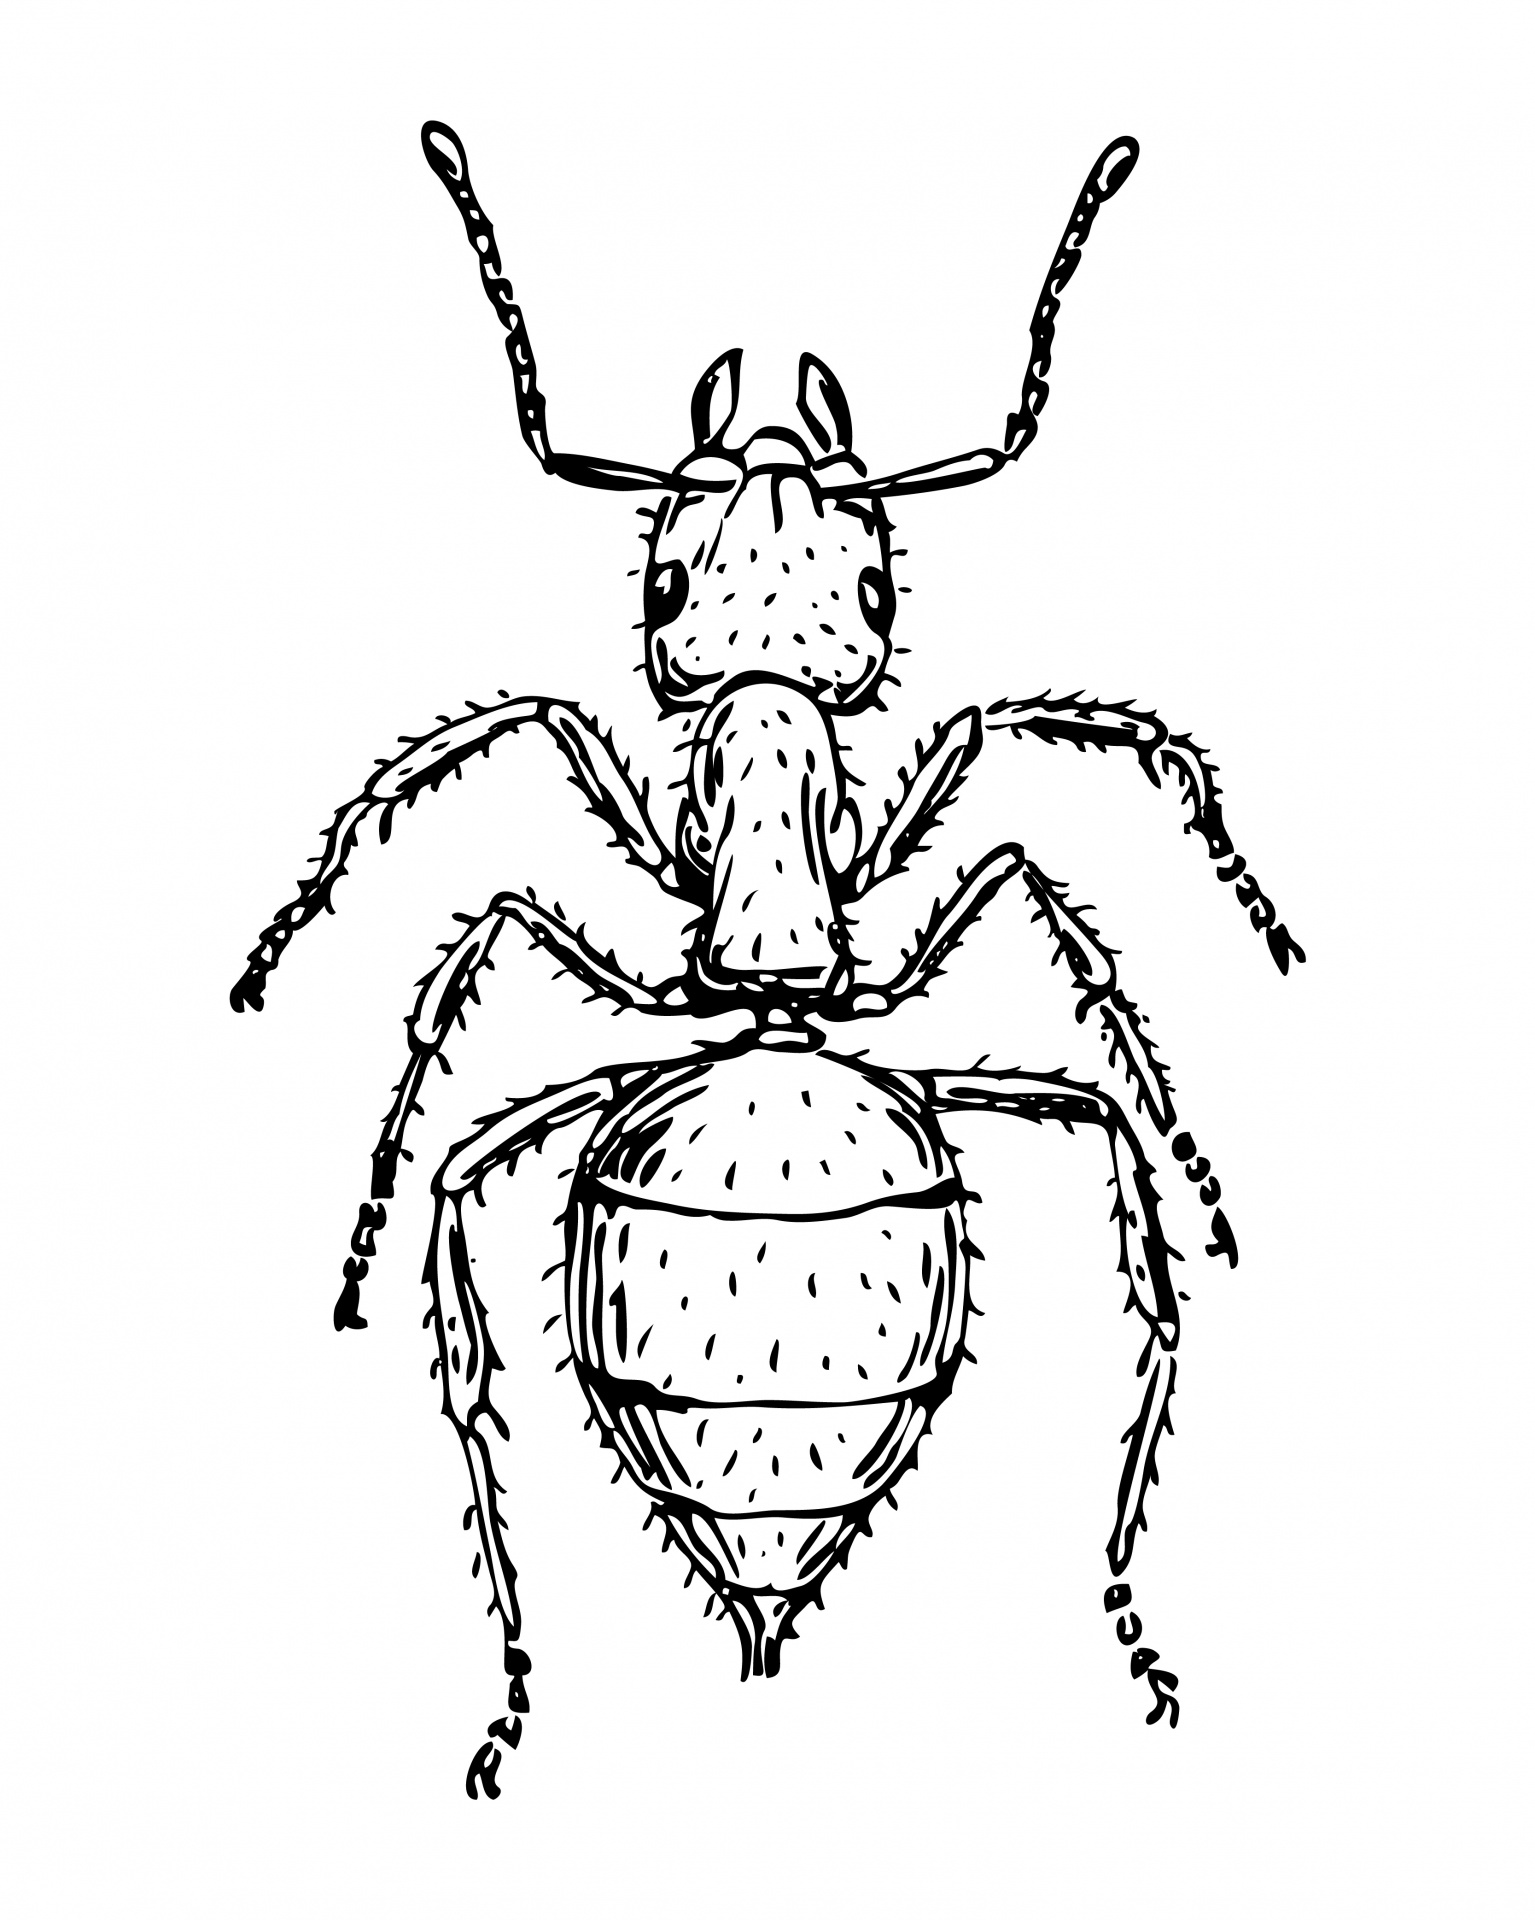 Ant clipart gray. Illustration free stock photo